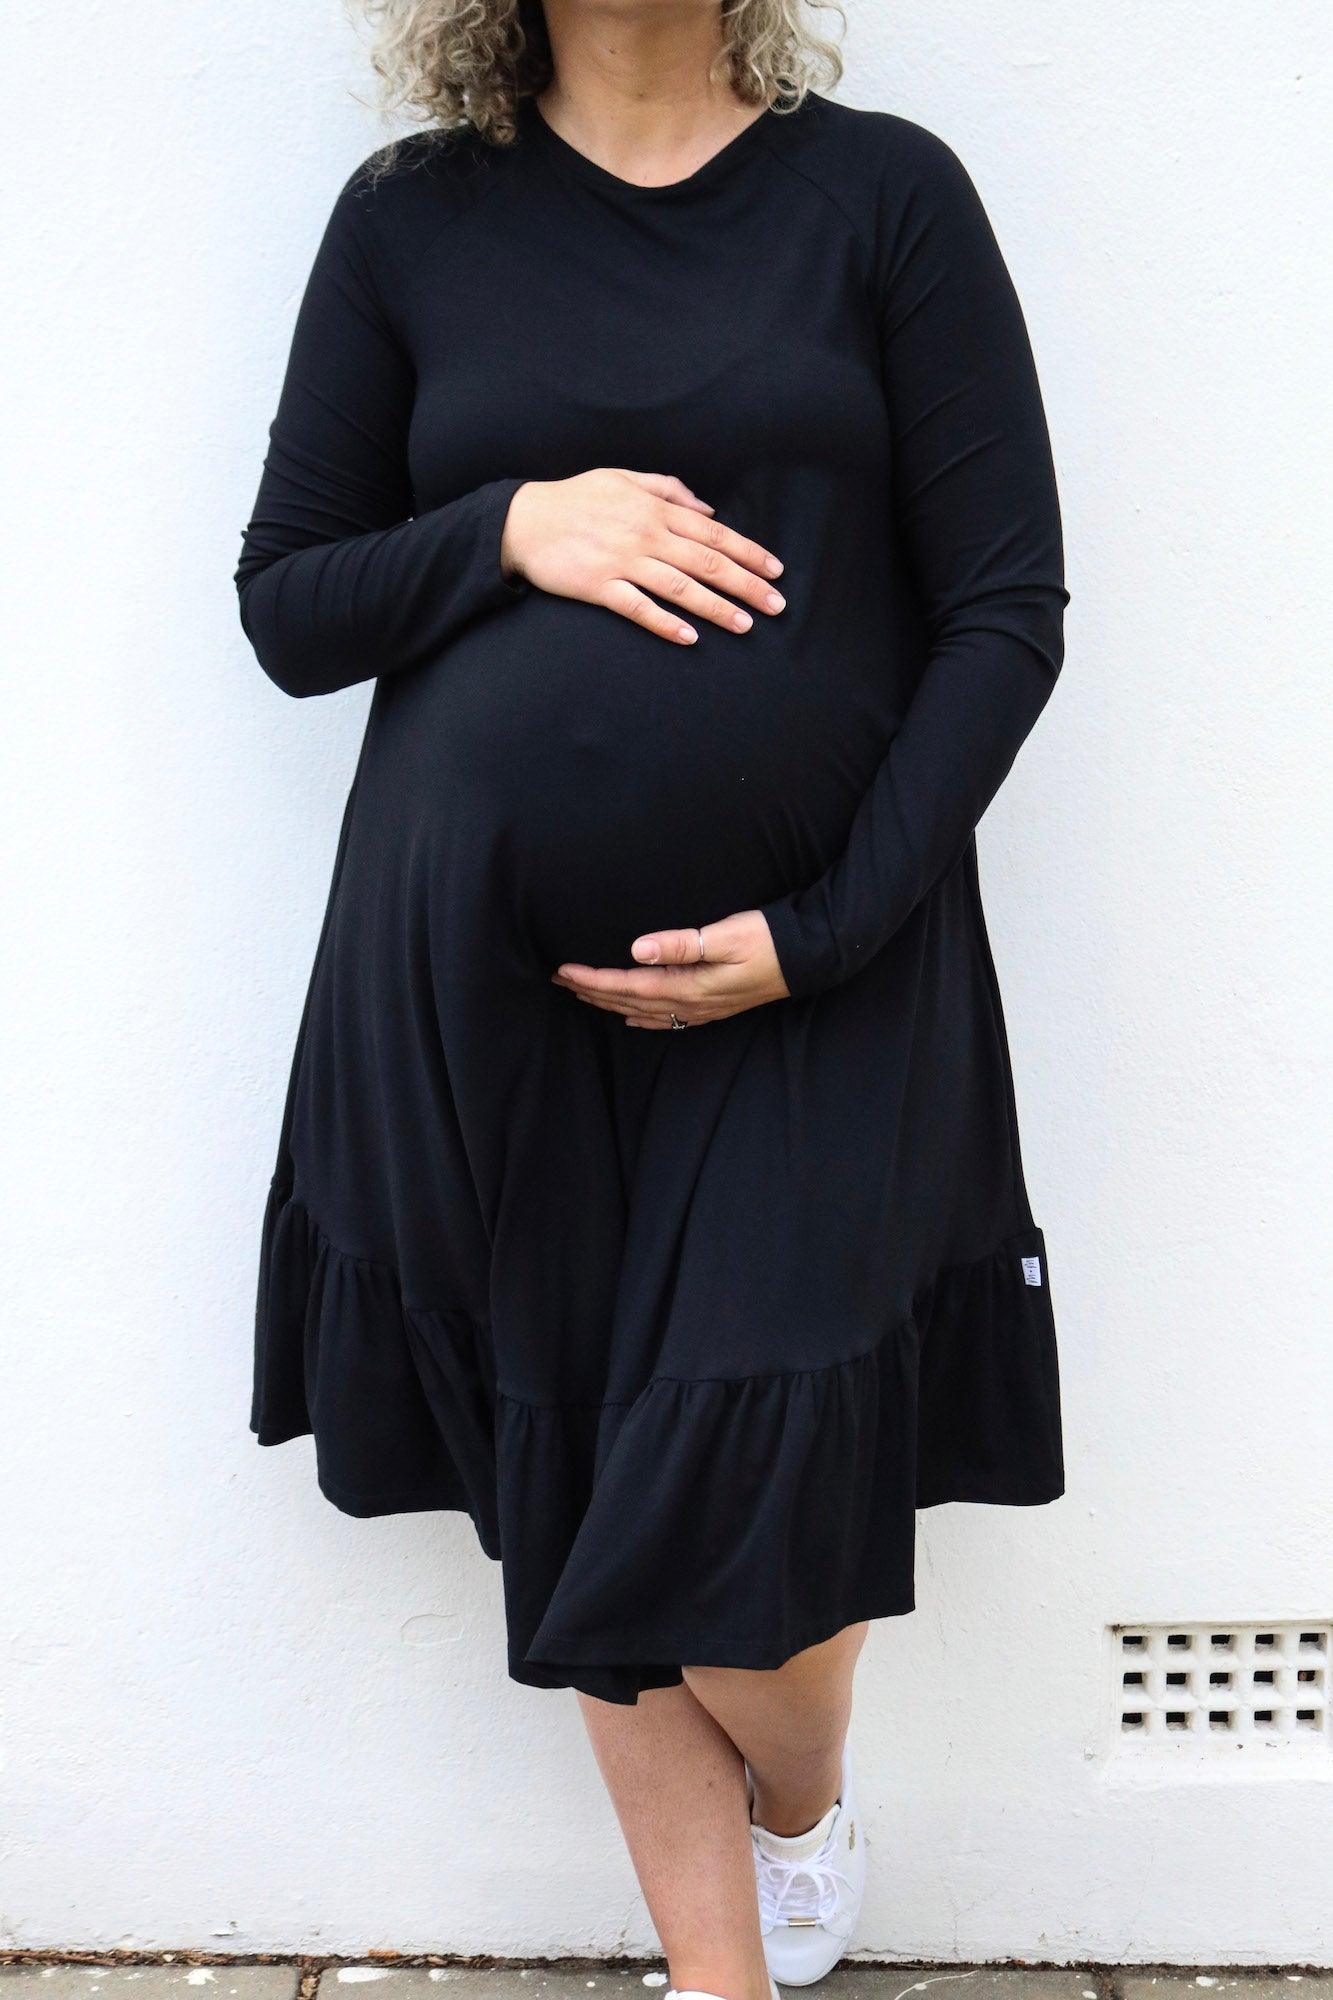 pregnant lady in a stylish black maternity dress